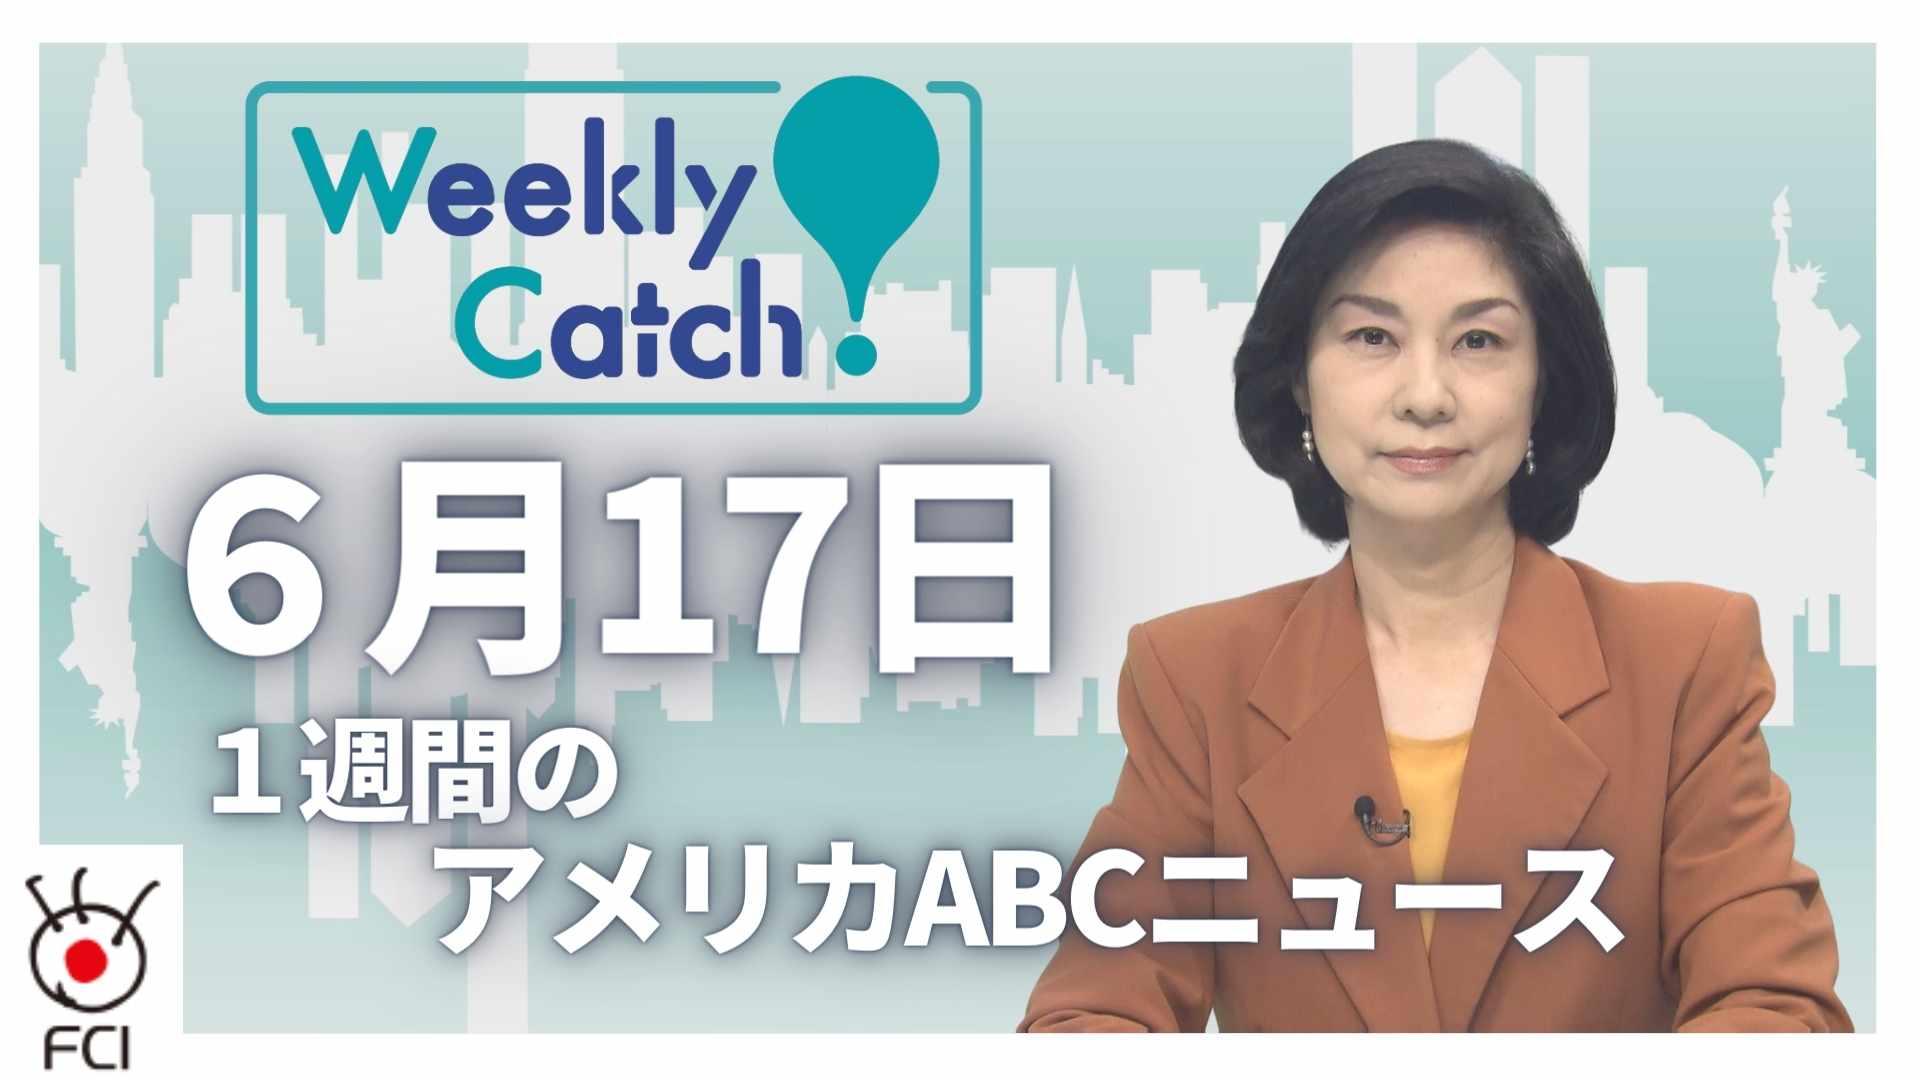 6月17 日 Weekly Catch!